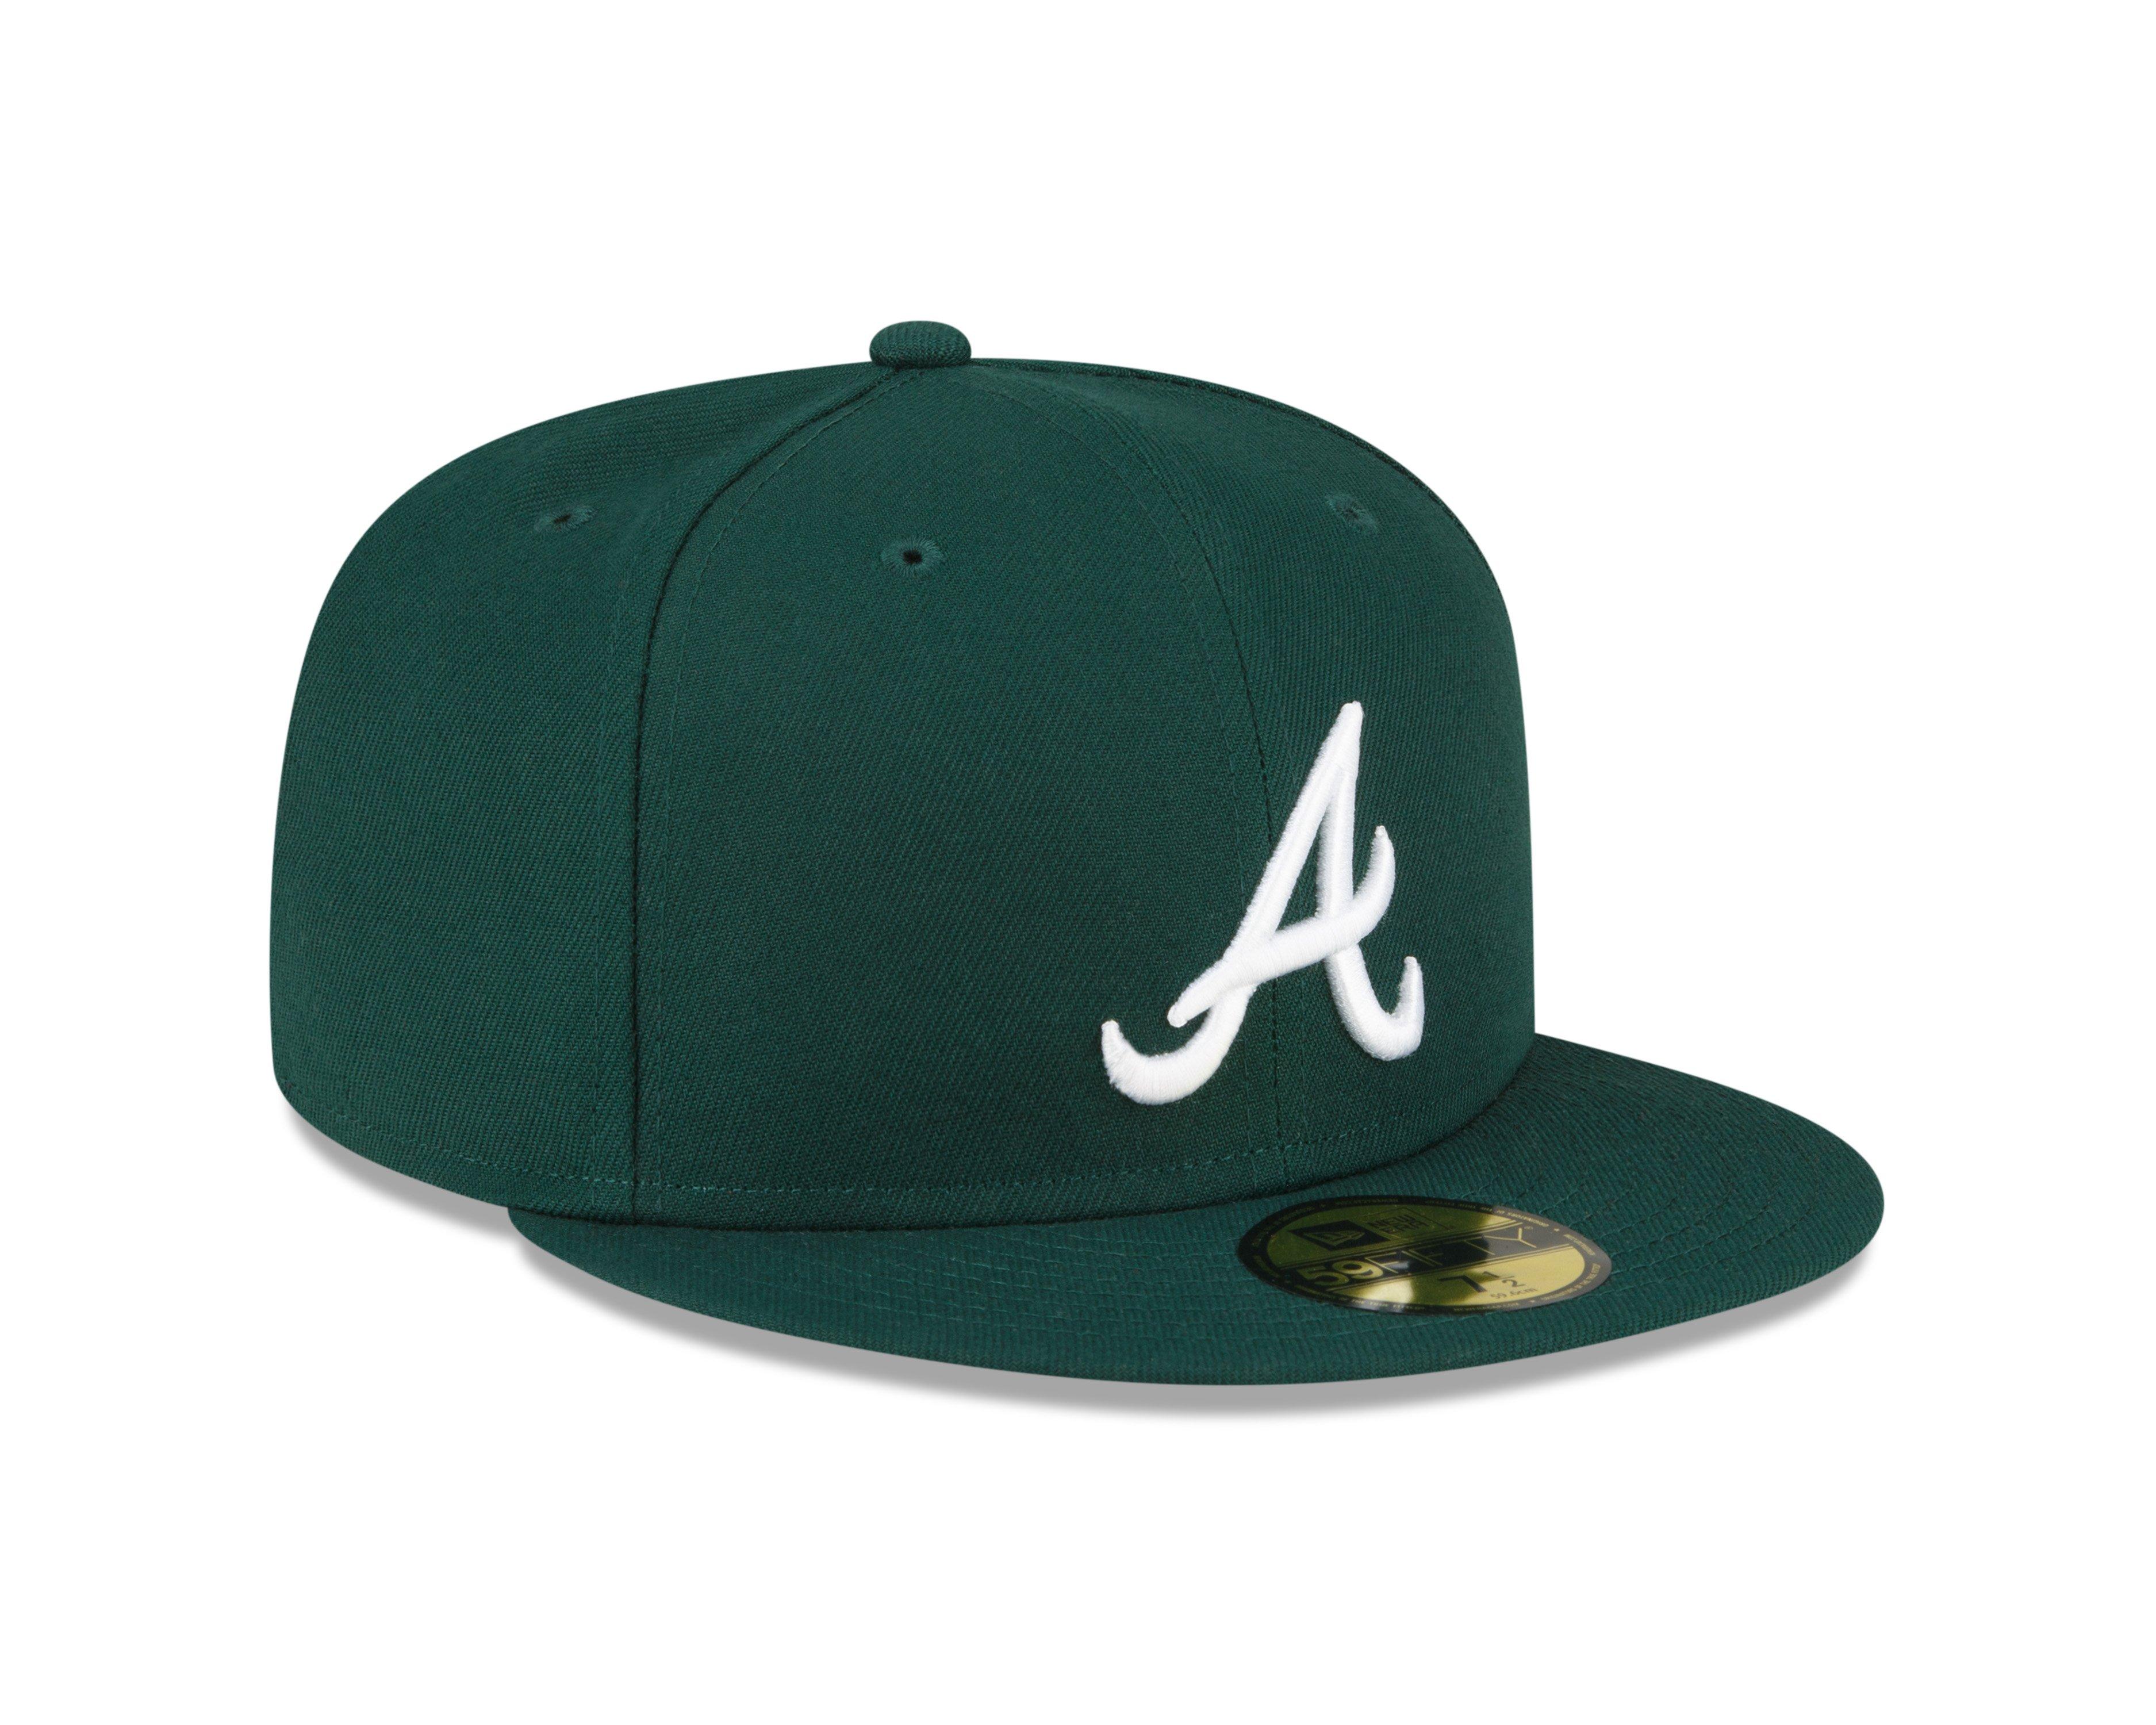 New Era 59FIFTY Atlanta Braves Fitted Hat Dark Green White